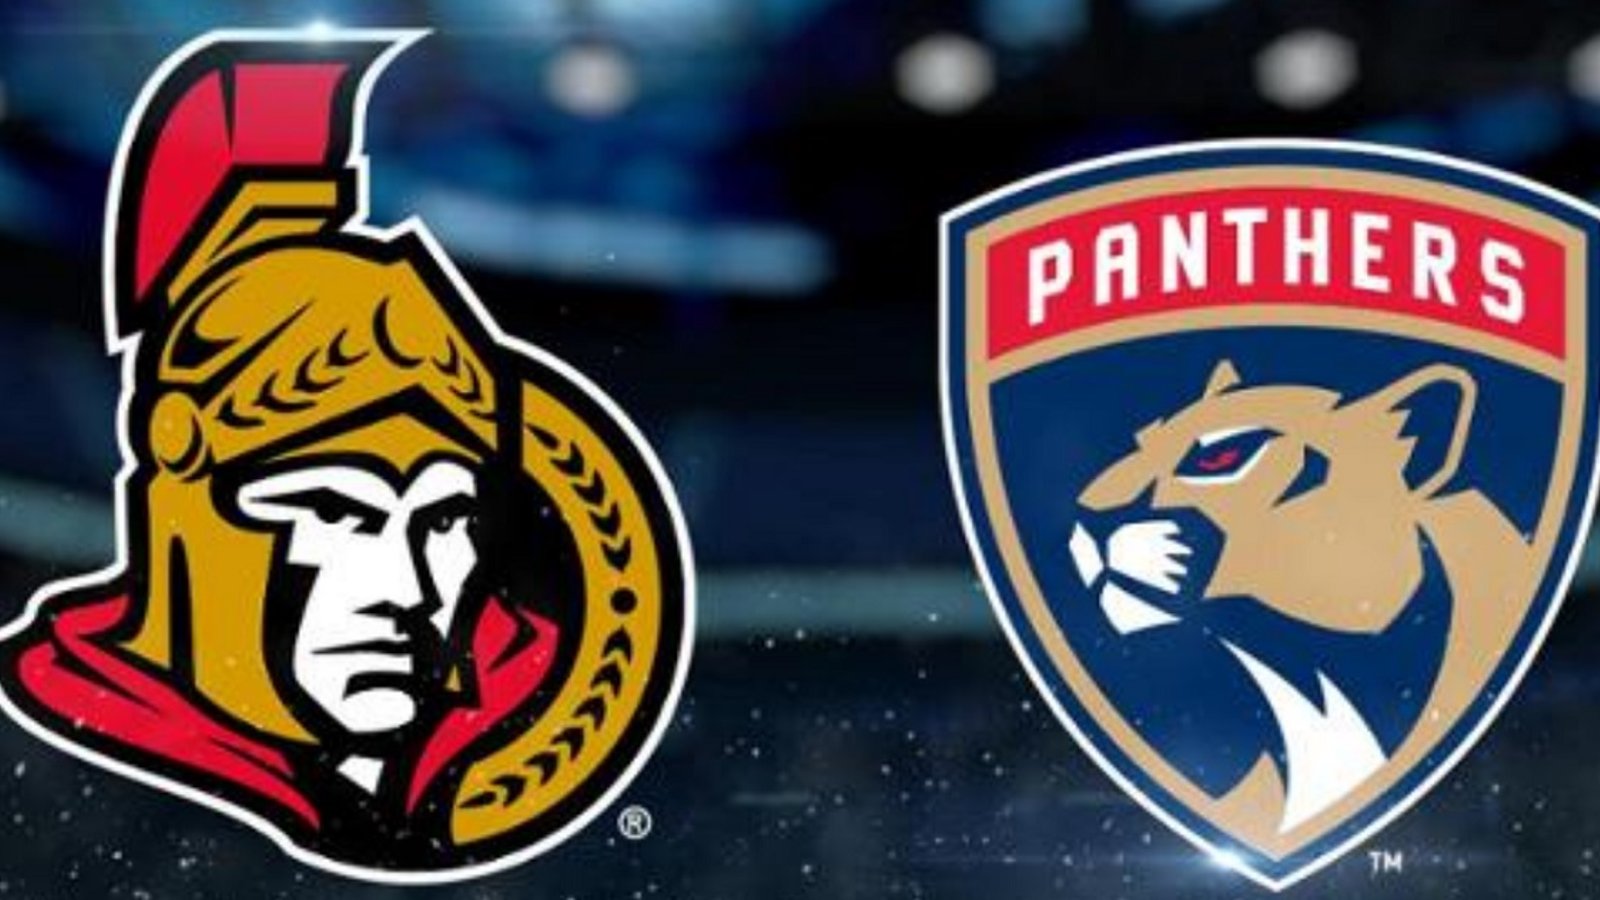 Senators and Panthers have made a minor trade.